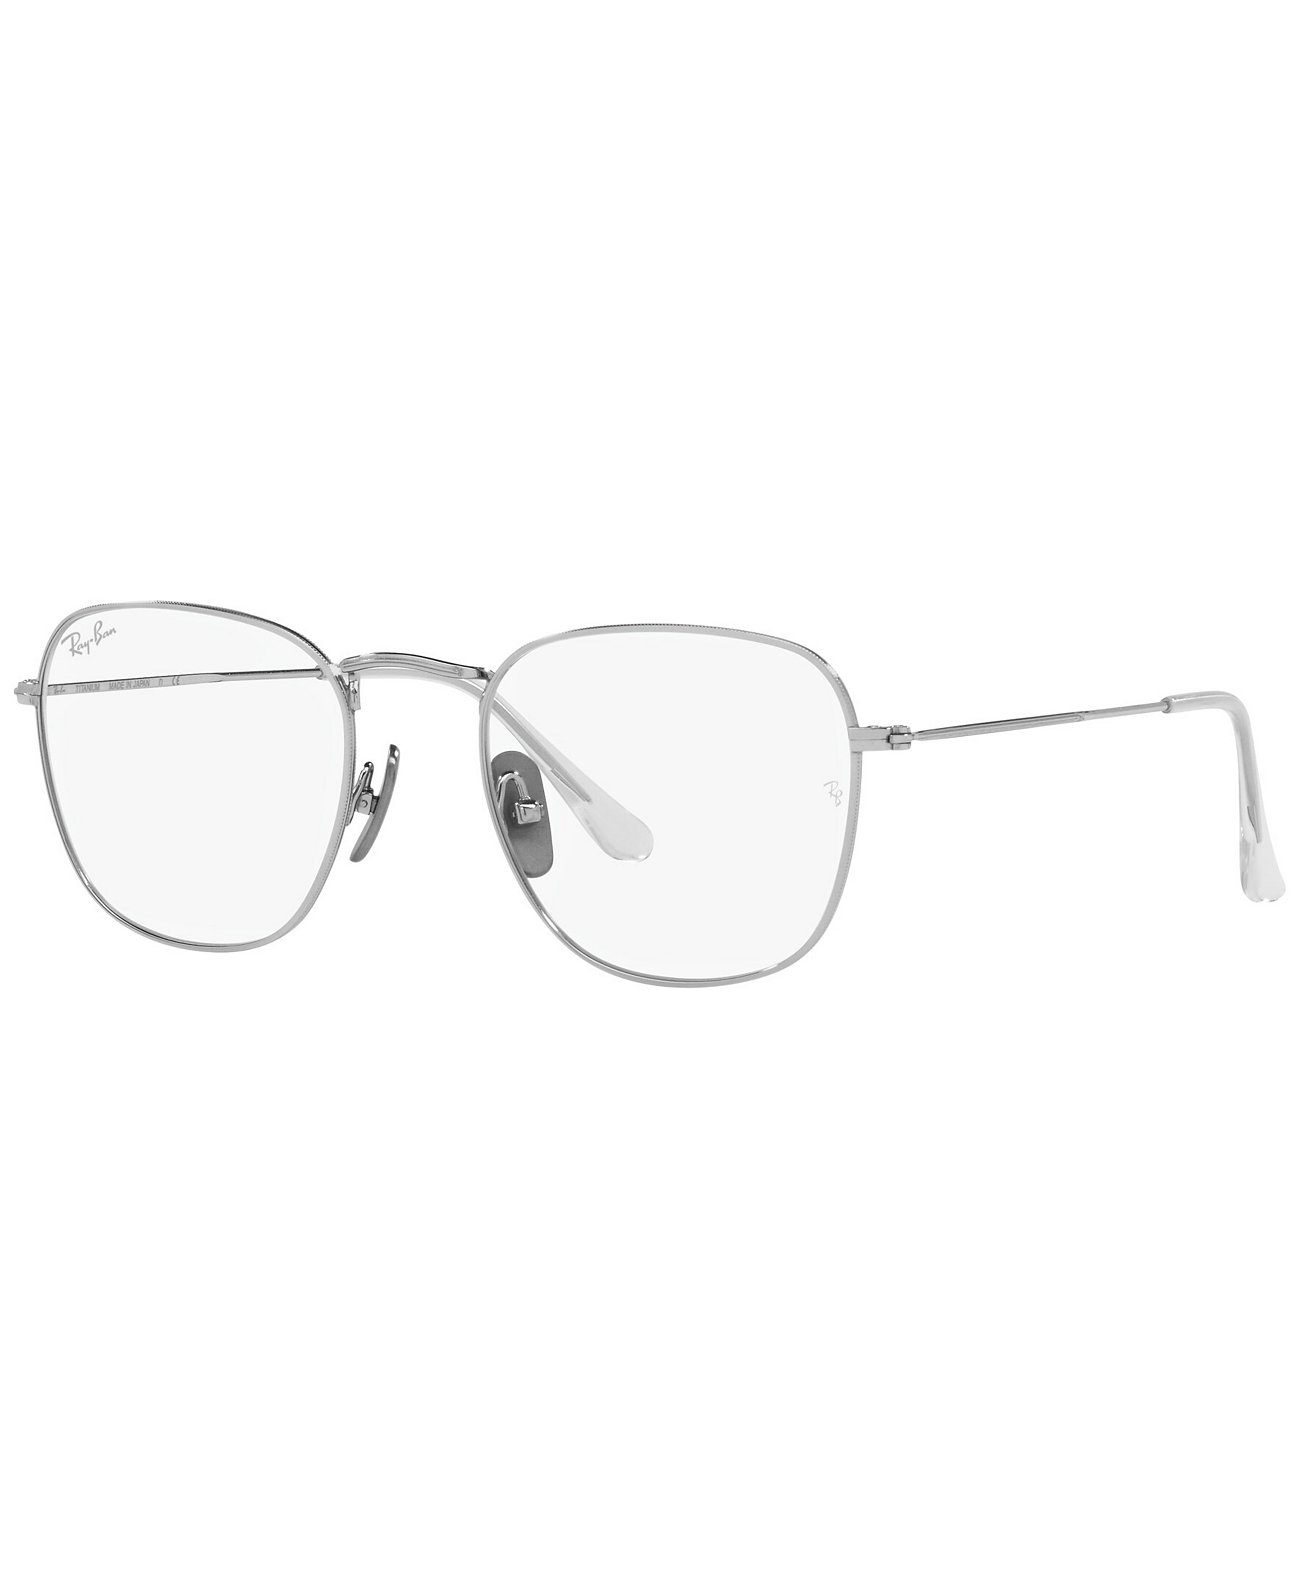 Men's Frank Titanium Optics Eyeglasses, RB8157V Ray-Ban